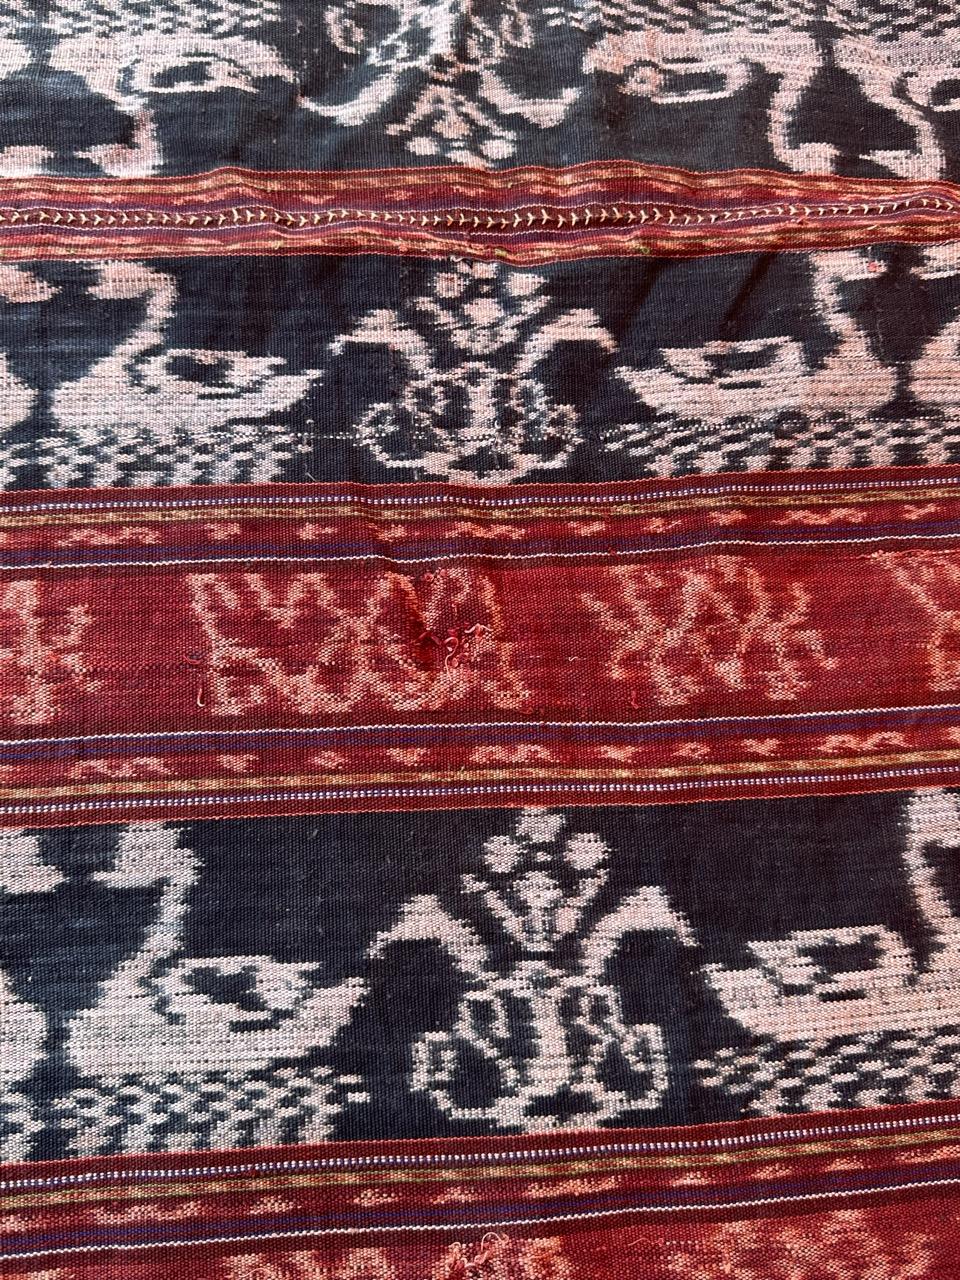 Bobyrug’s Vintage Indonesian Ikat Tapestry or Tablecloth For Sale 4